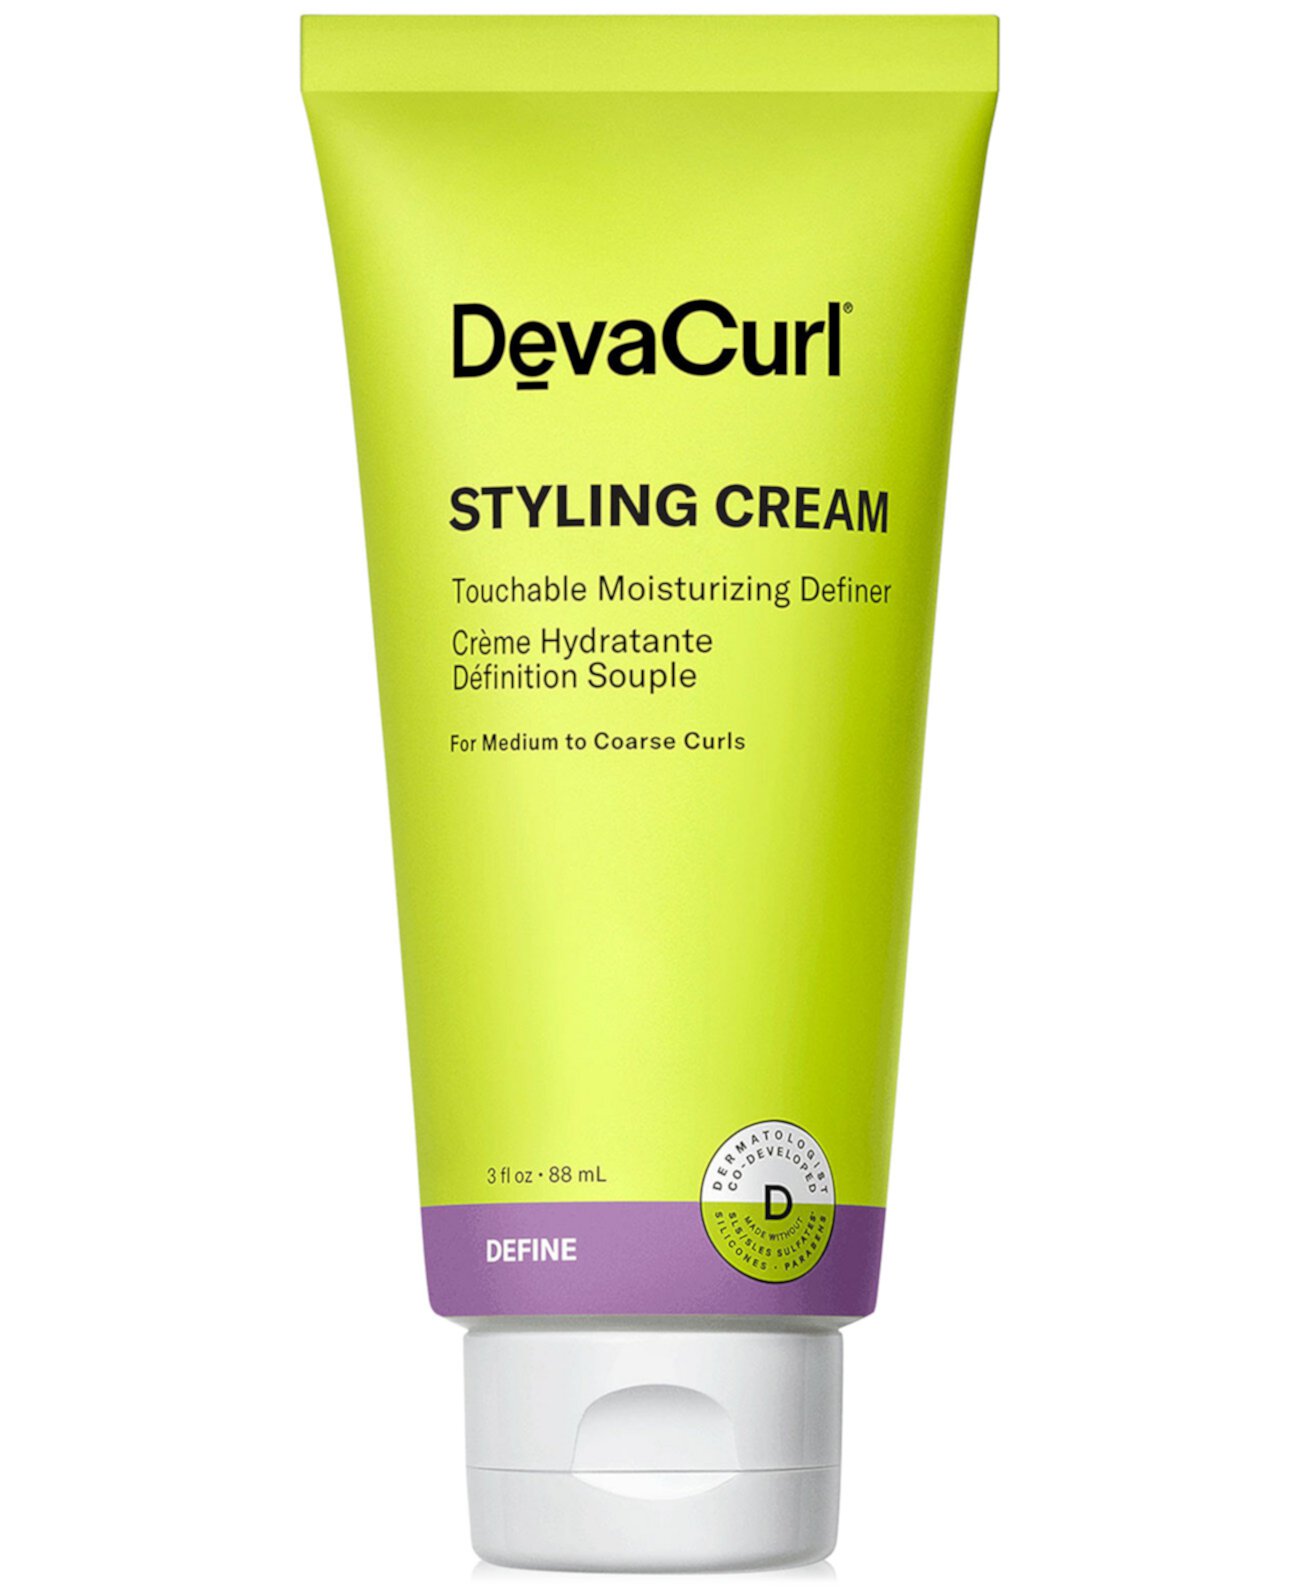 Styling Cream Touchable Moisturizing Definer, 3 унции, от PUREBEAUTY Salon & Spa DevaCurl